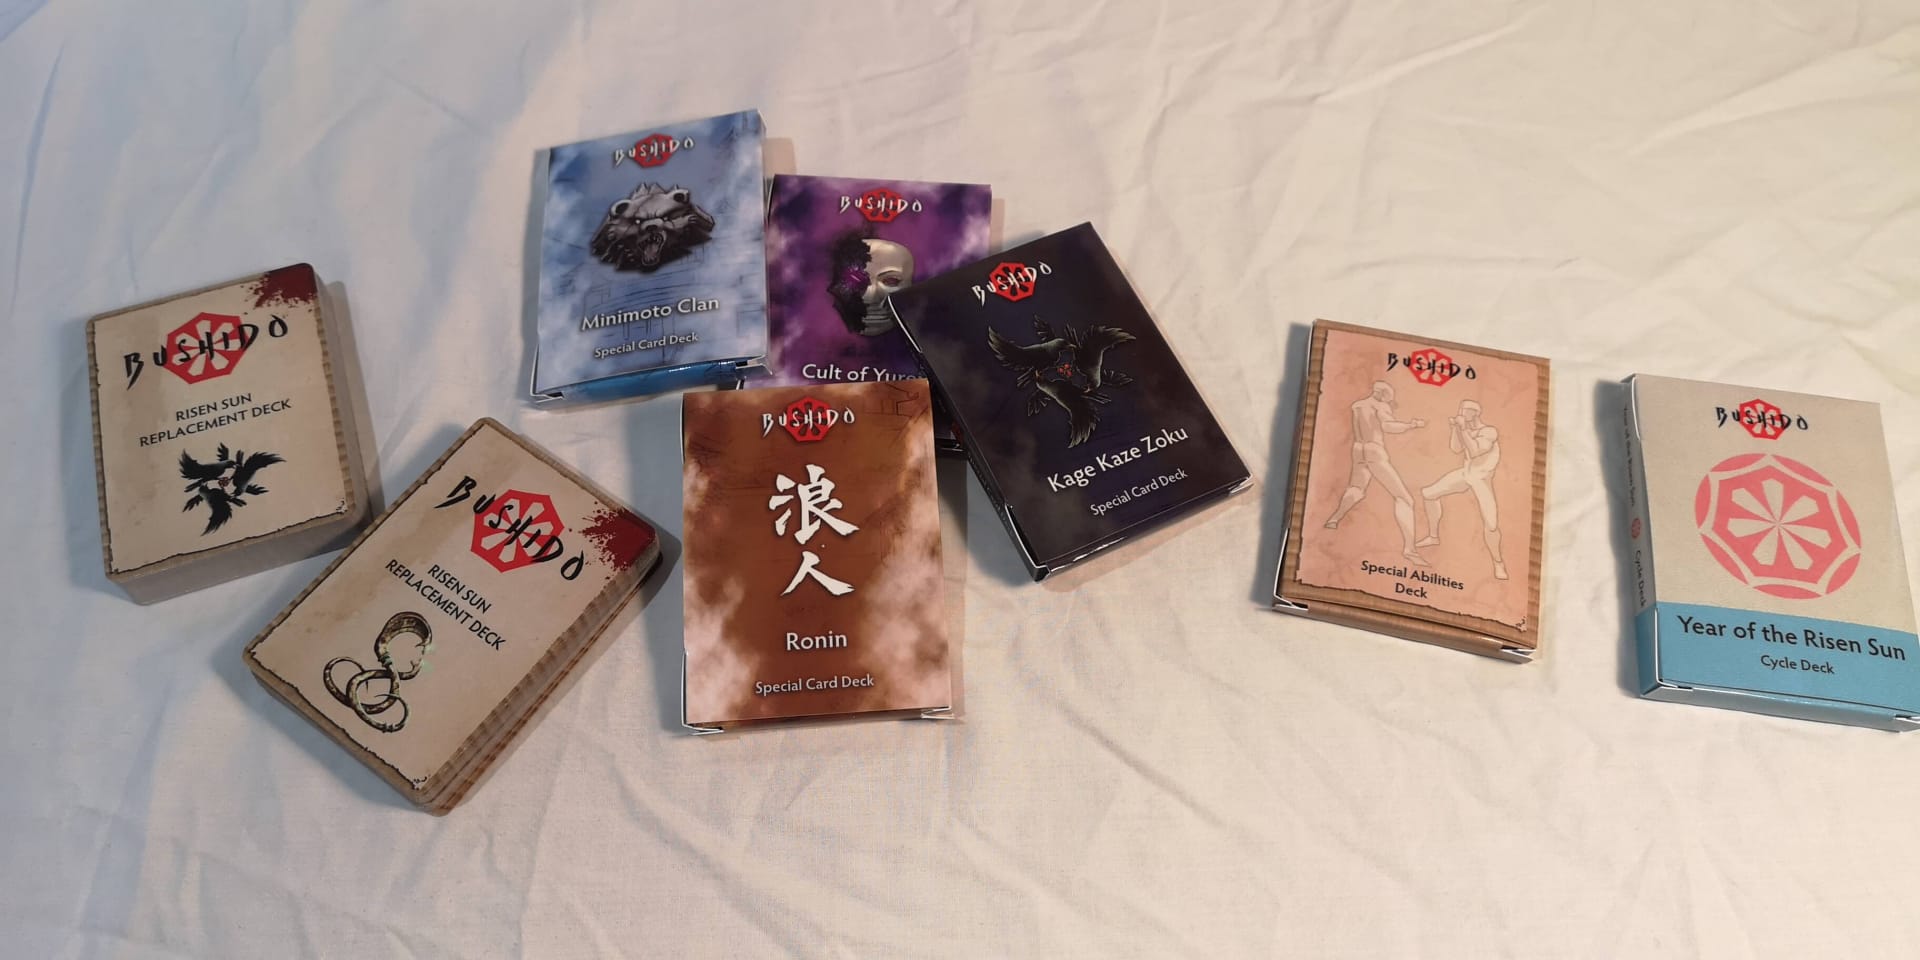 The various card packs for Bushido Risen Sun.